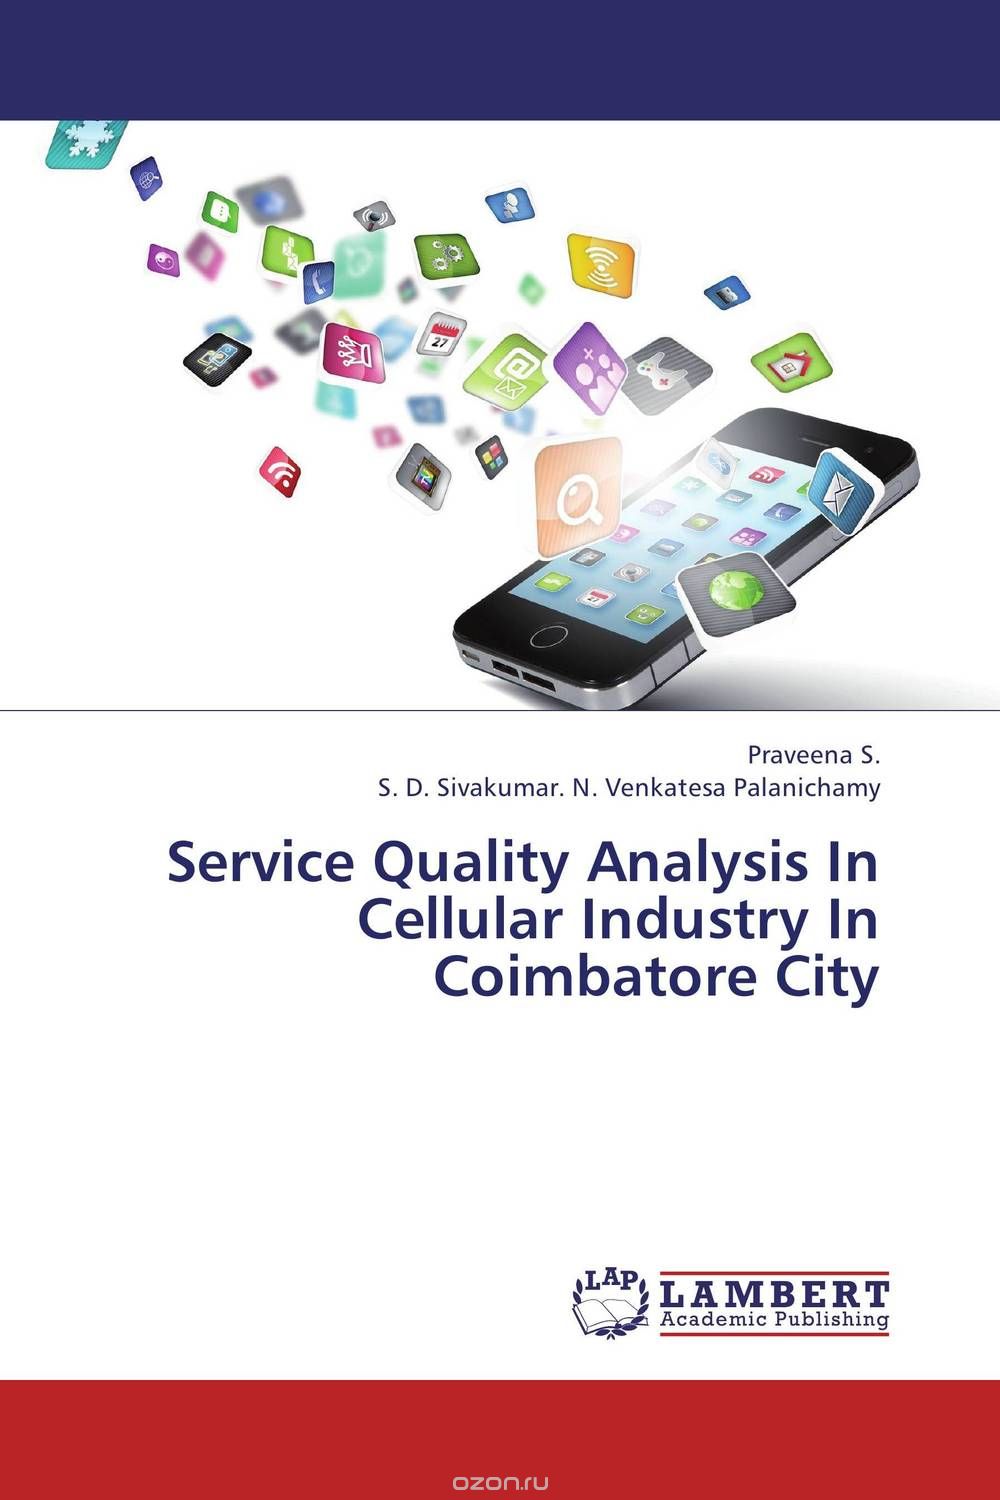 Скачать книгу "Service Quality Analysis In Cellular Industry In Coimbatore City"